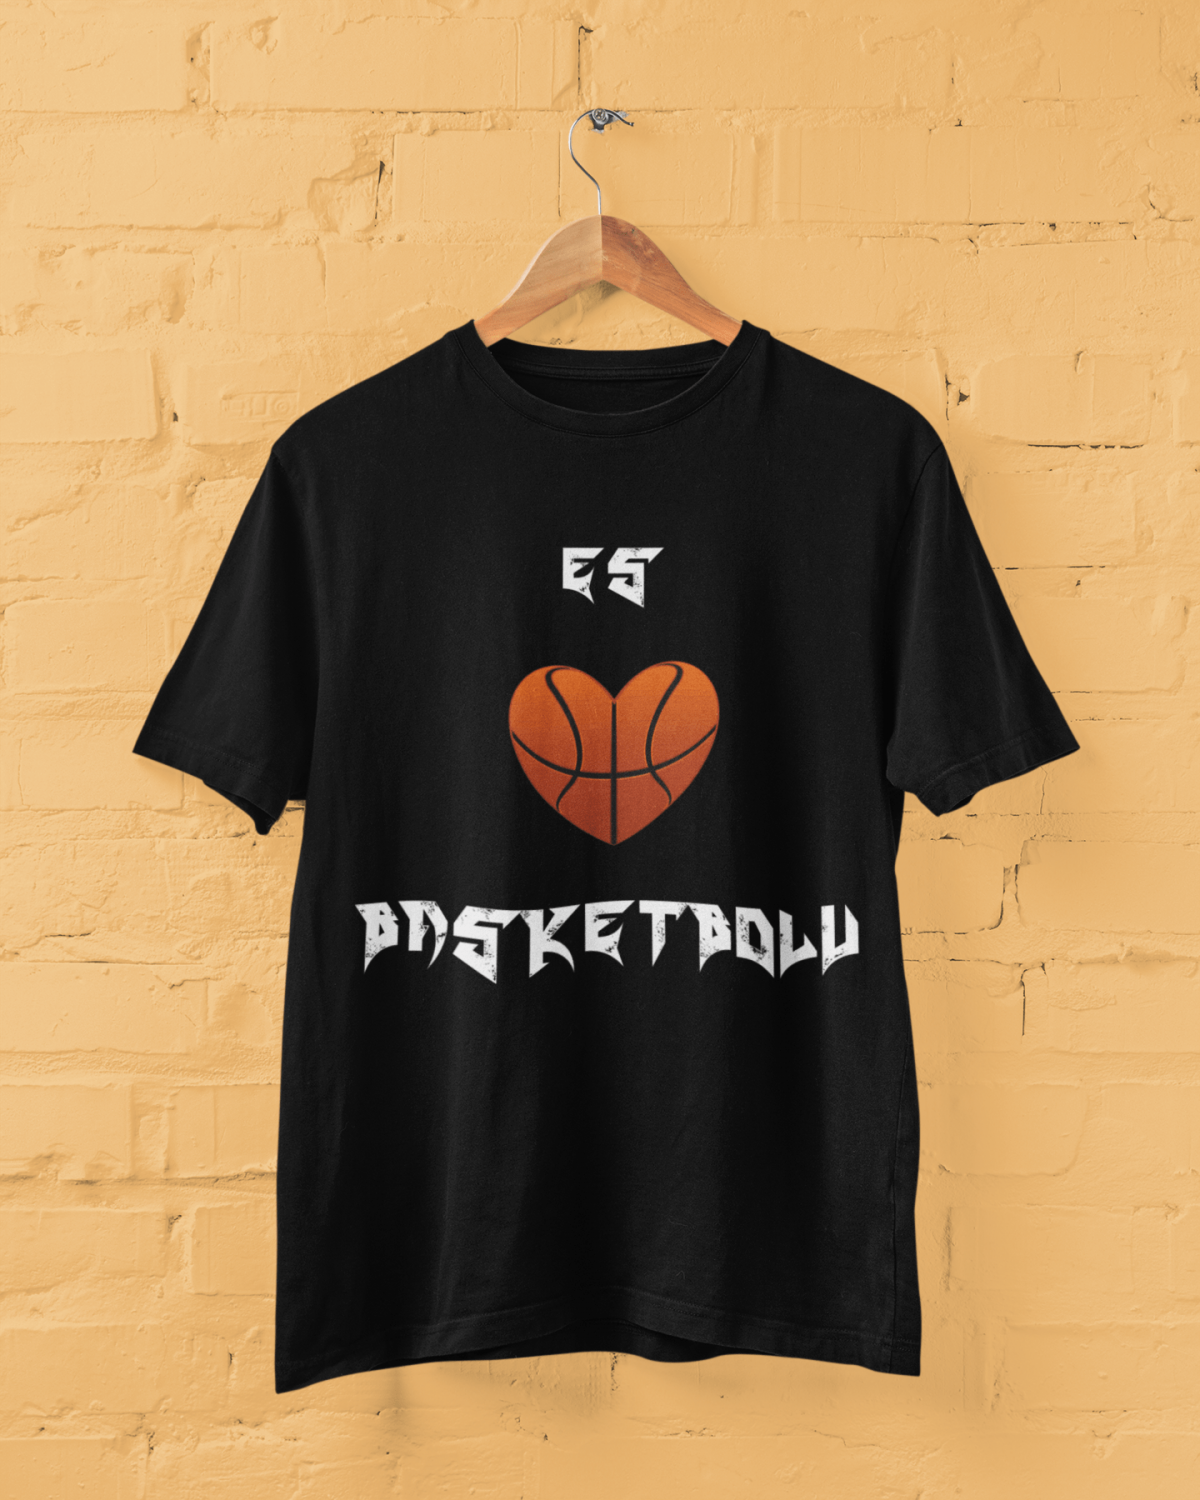 tkrekls "Es ♥ basketbolu"